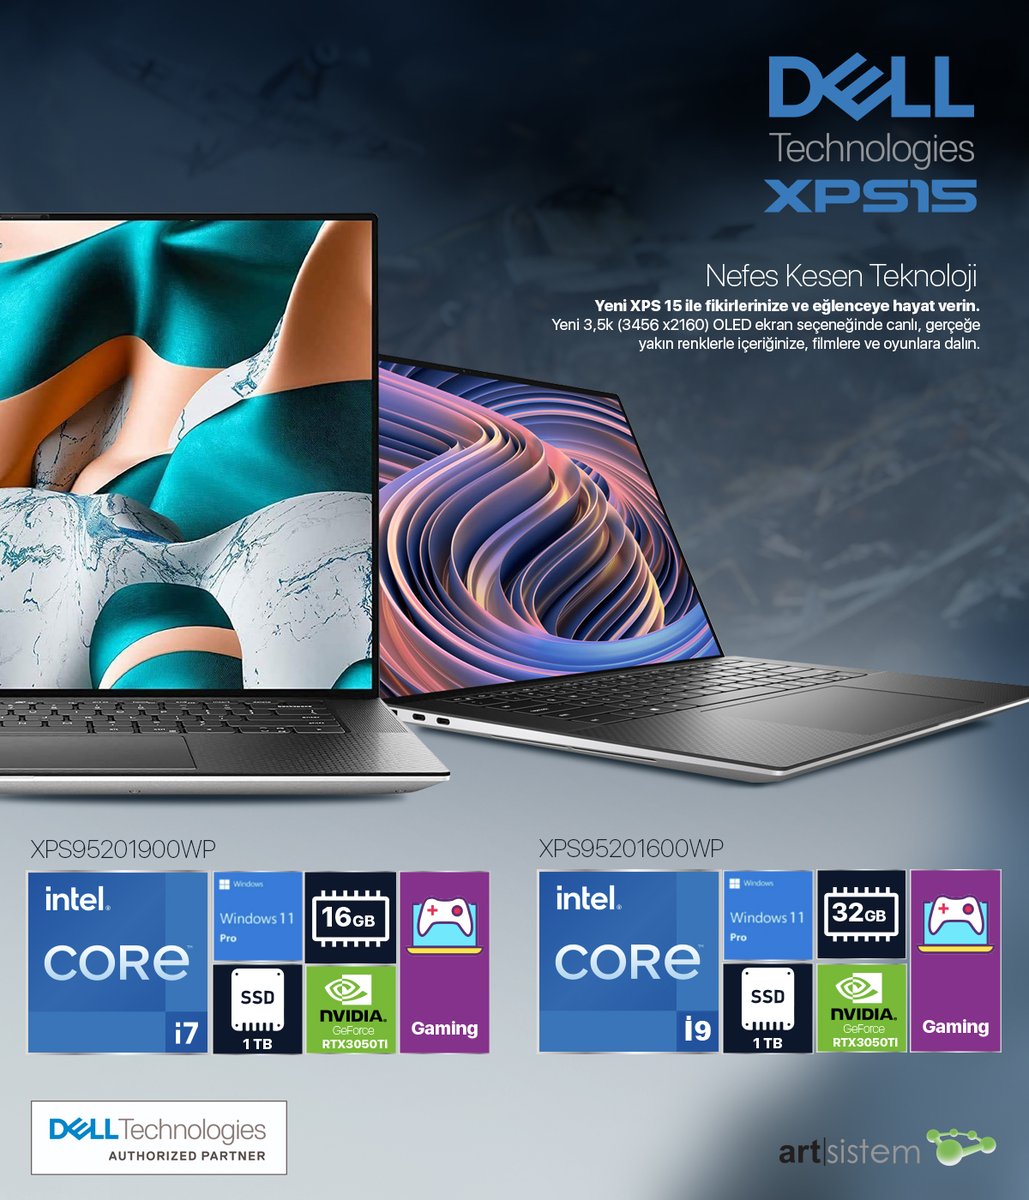 Dell XPS 15 Notebook | Nefes Kesen Teknoloji

#dell #xps #xps15 #inteli9 #inteli7 #windows11 #nvidia #geforce #xps95201900wp #xps95201600wp